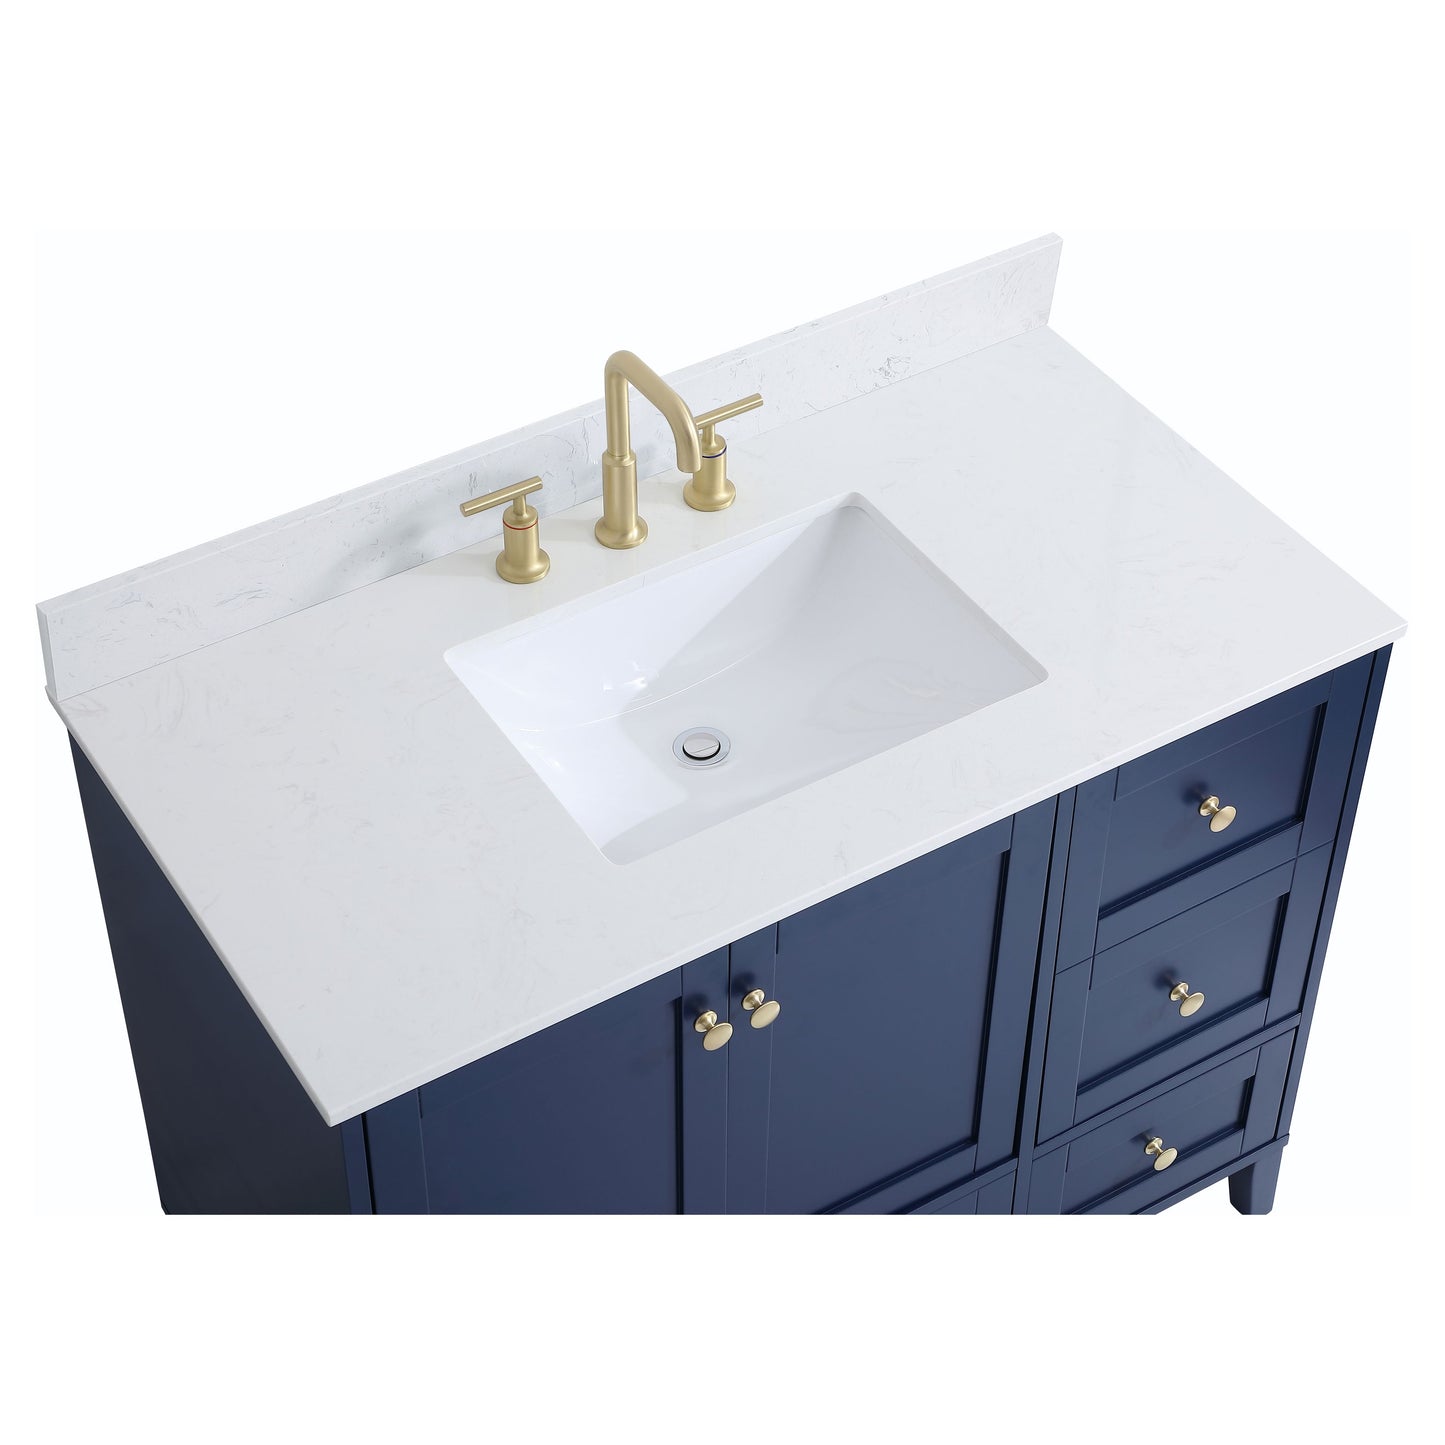 VF18042BL-BS 42" Single Bathroom Vanity in Blue With Backsplash